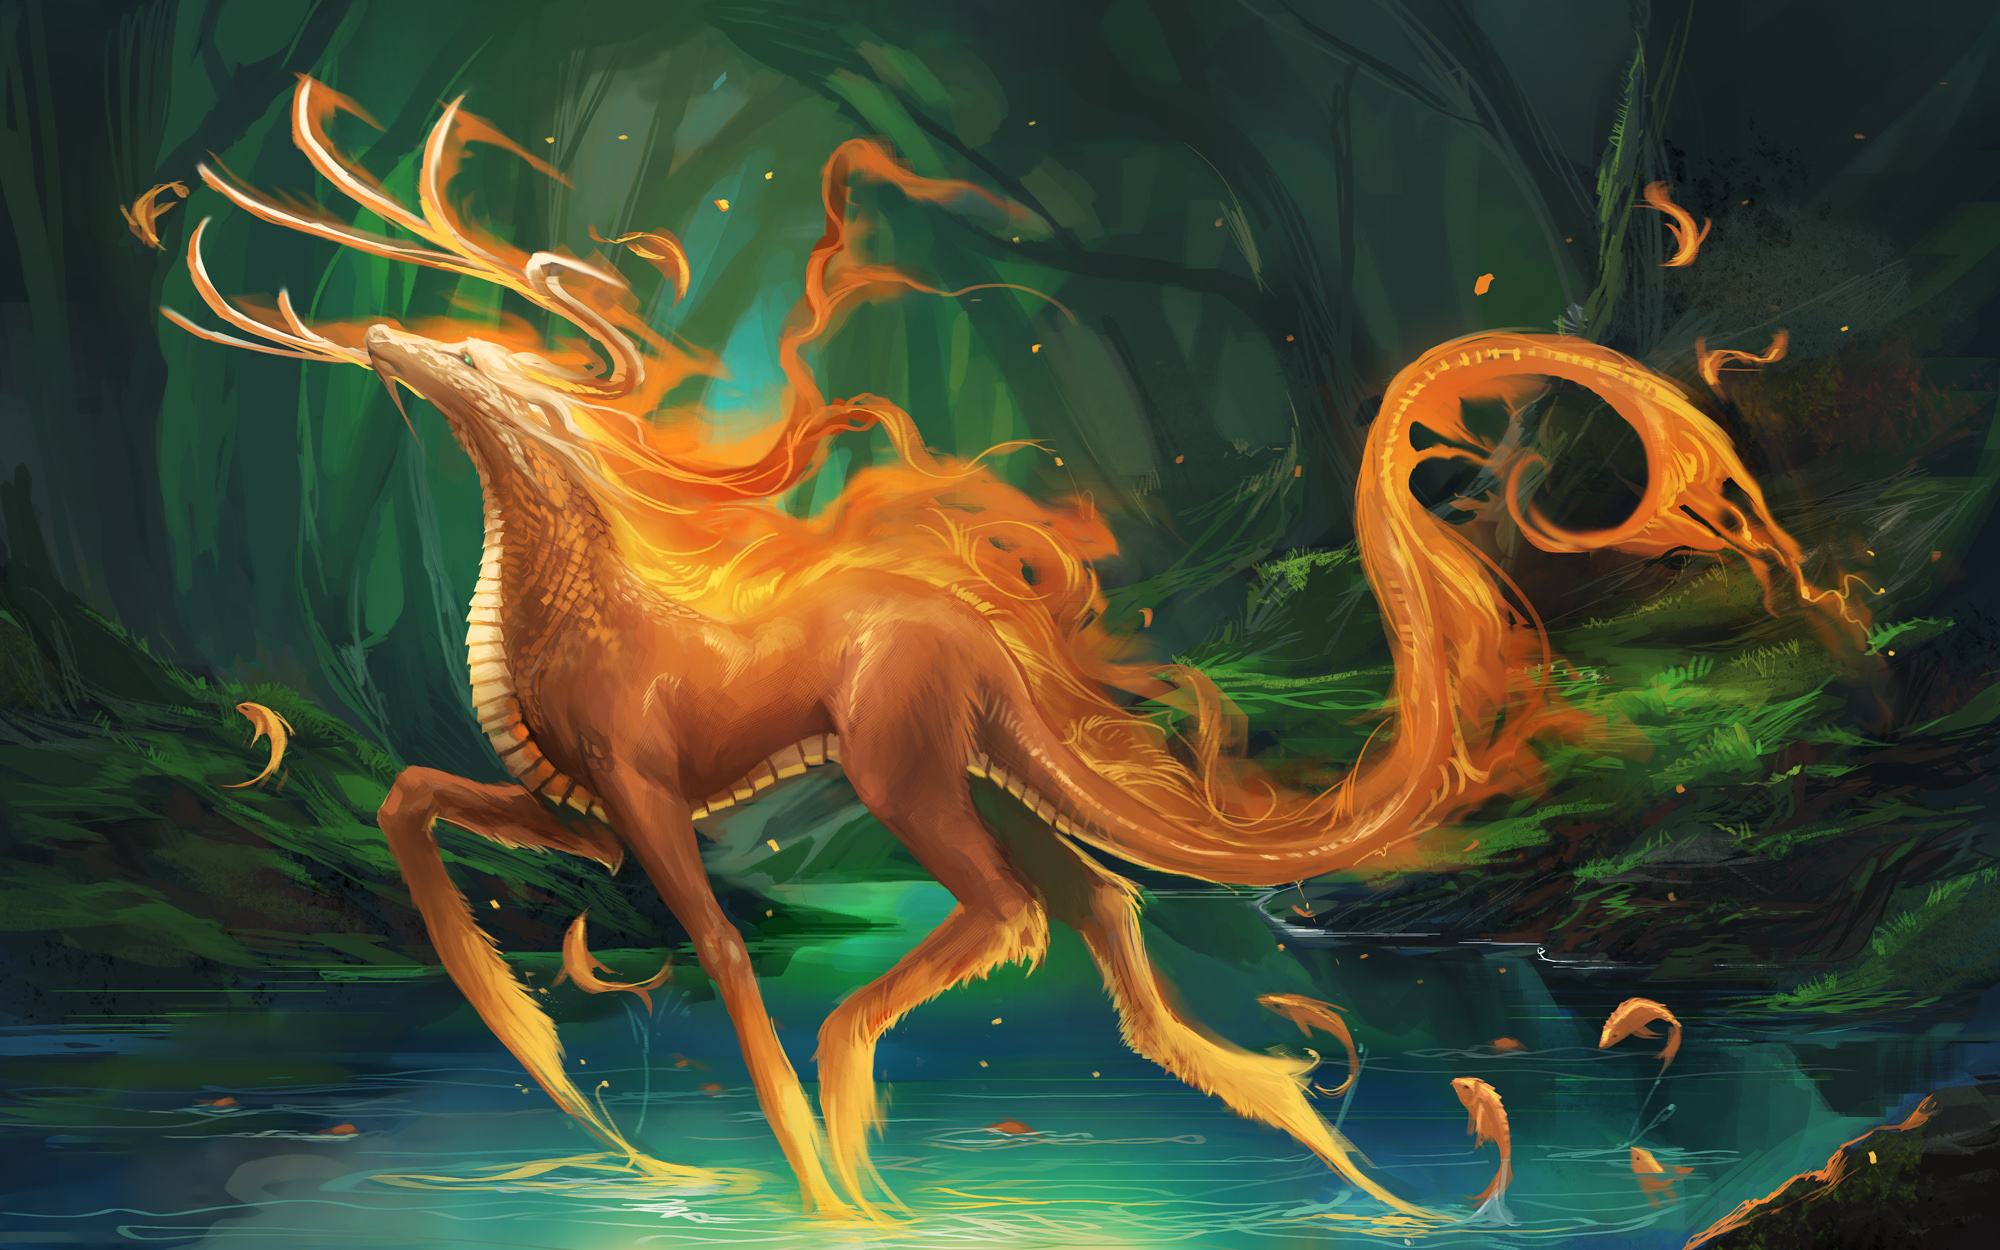 Digital Art Fantasy Art Forest River Fish Trees Fictional Creatures Fire Dragon 2000x1250